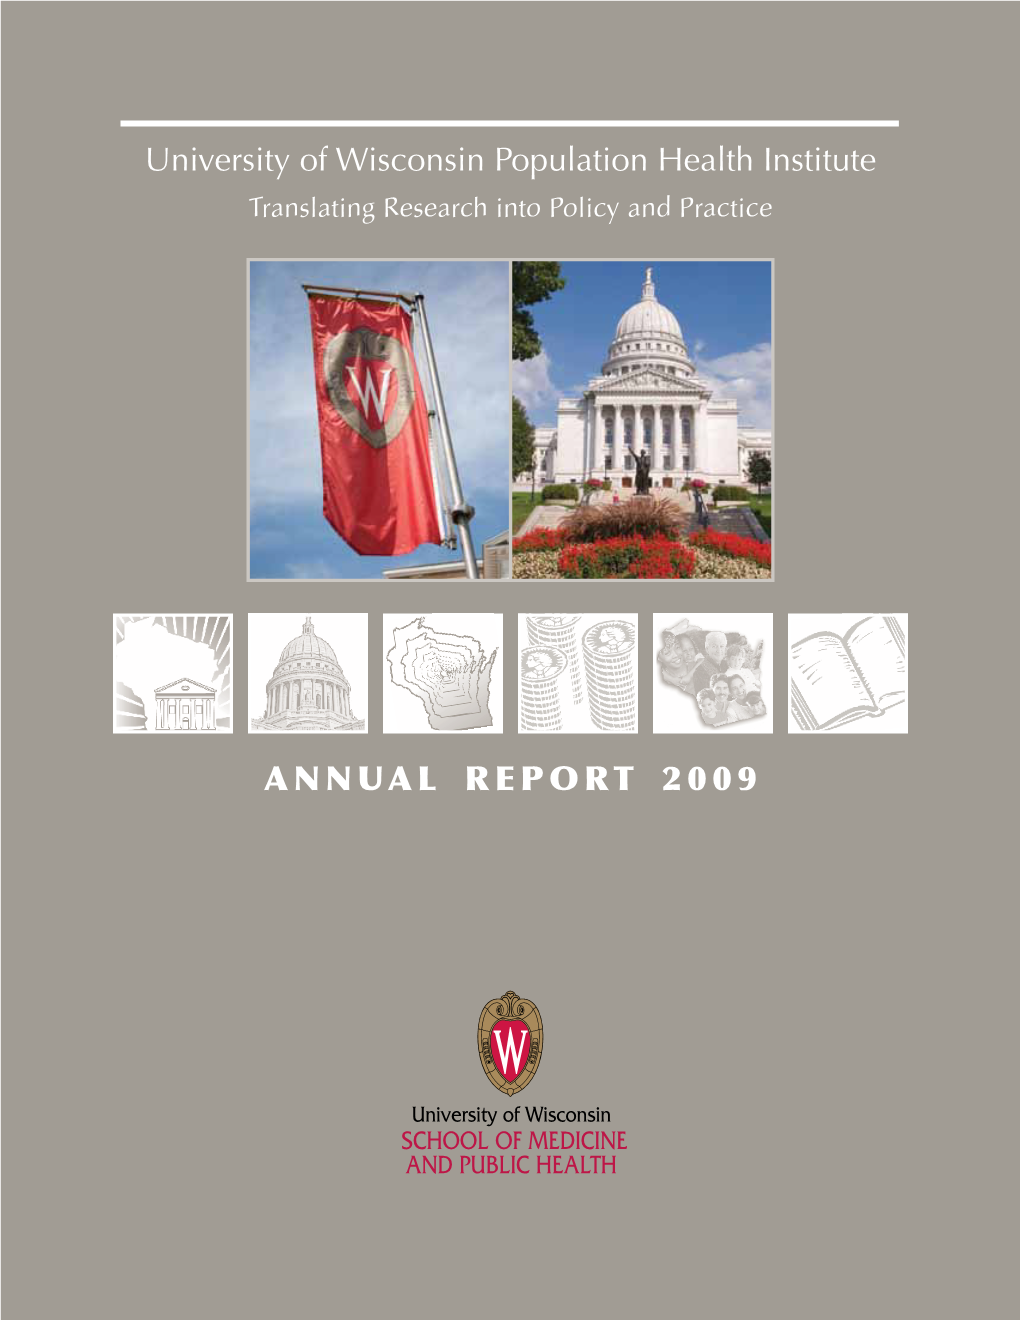 University of Wisconsin Population Health Institute Annual Report 2009